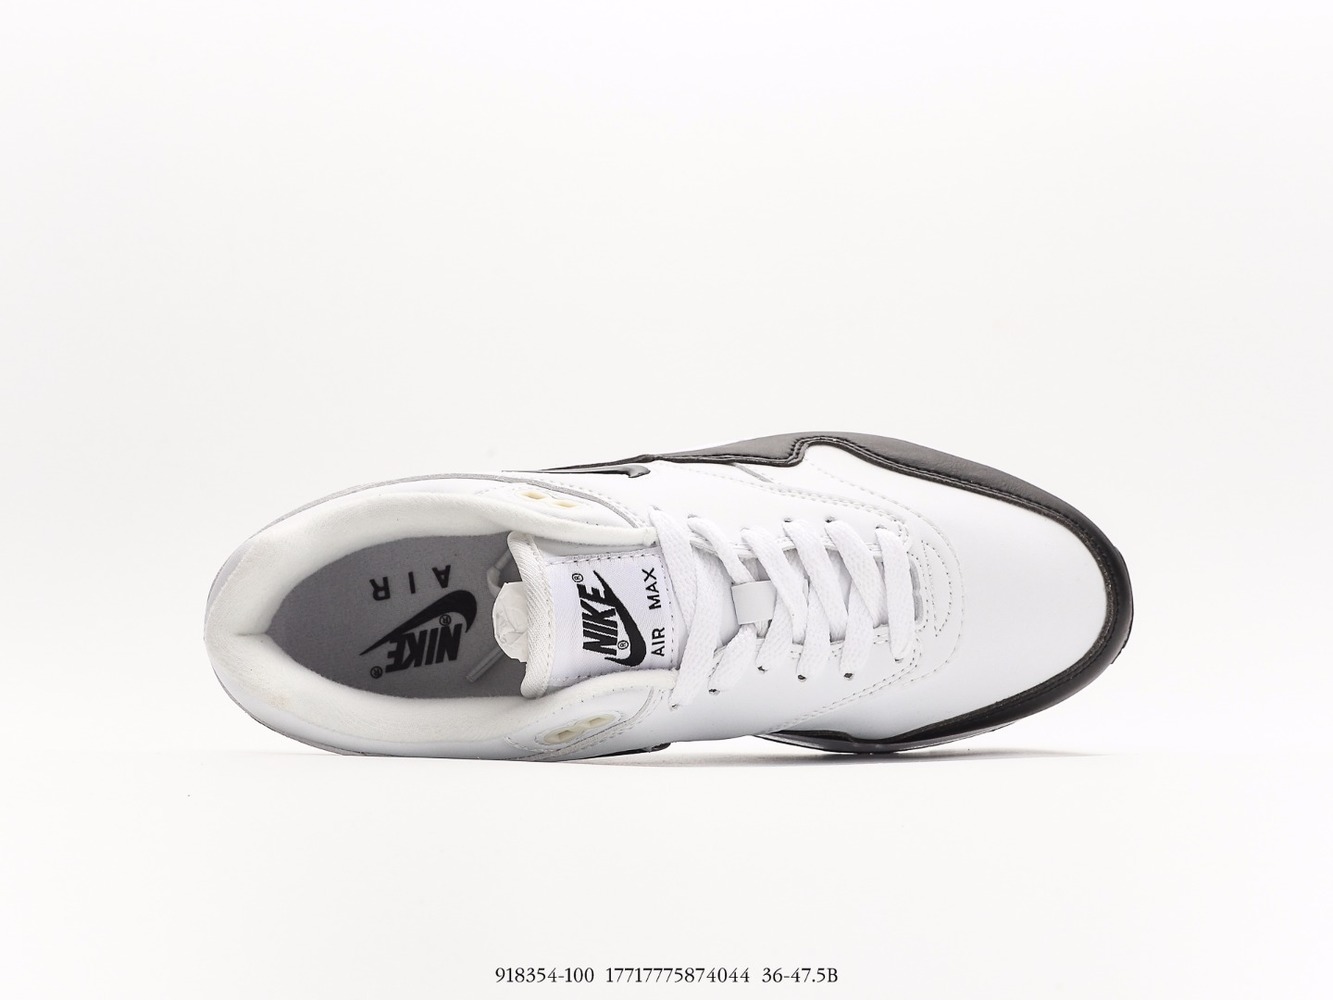 Nike Air Max 1 Jewel White Black_918354-100